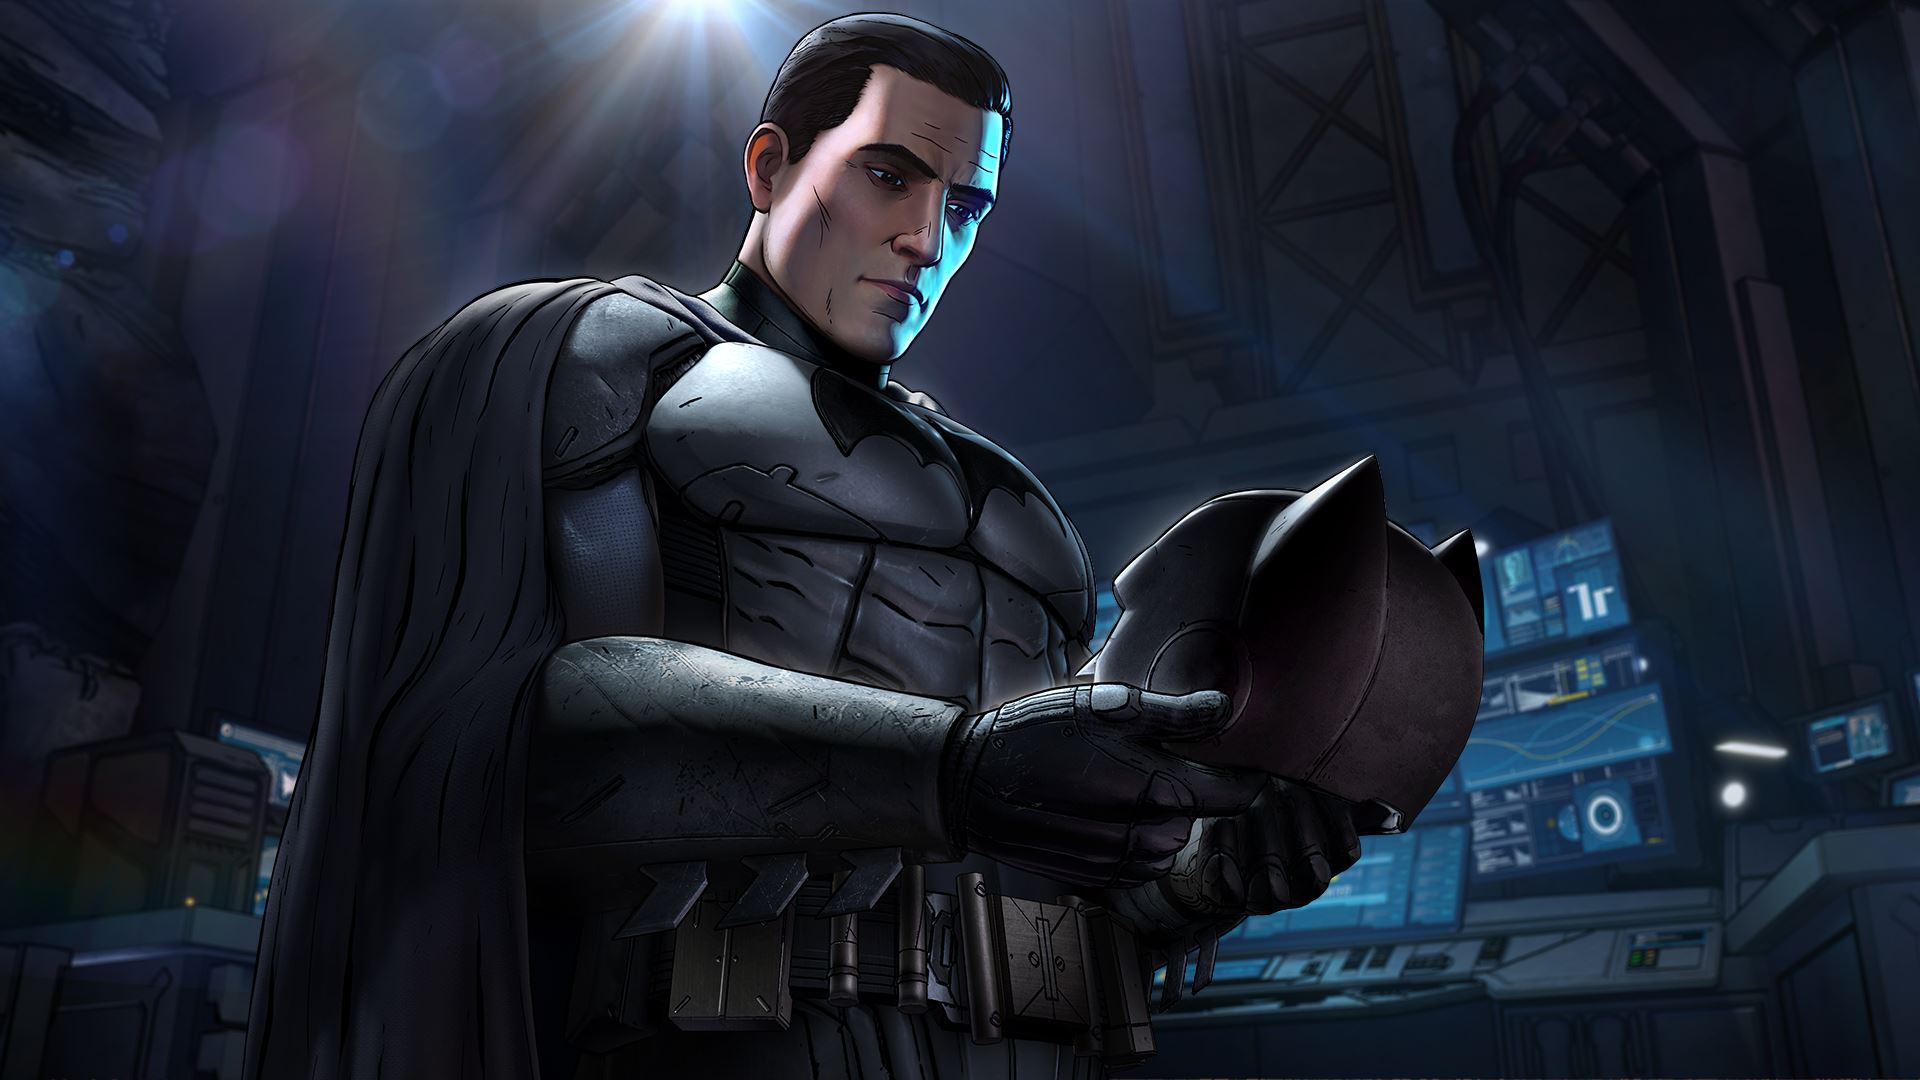 Batman: The Telltale Series - Episodio 2, disponible gratis para Xbox One